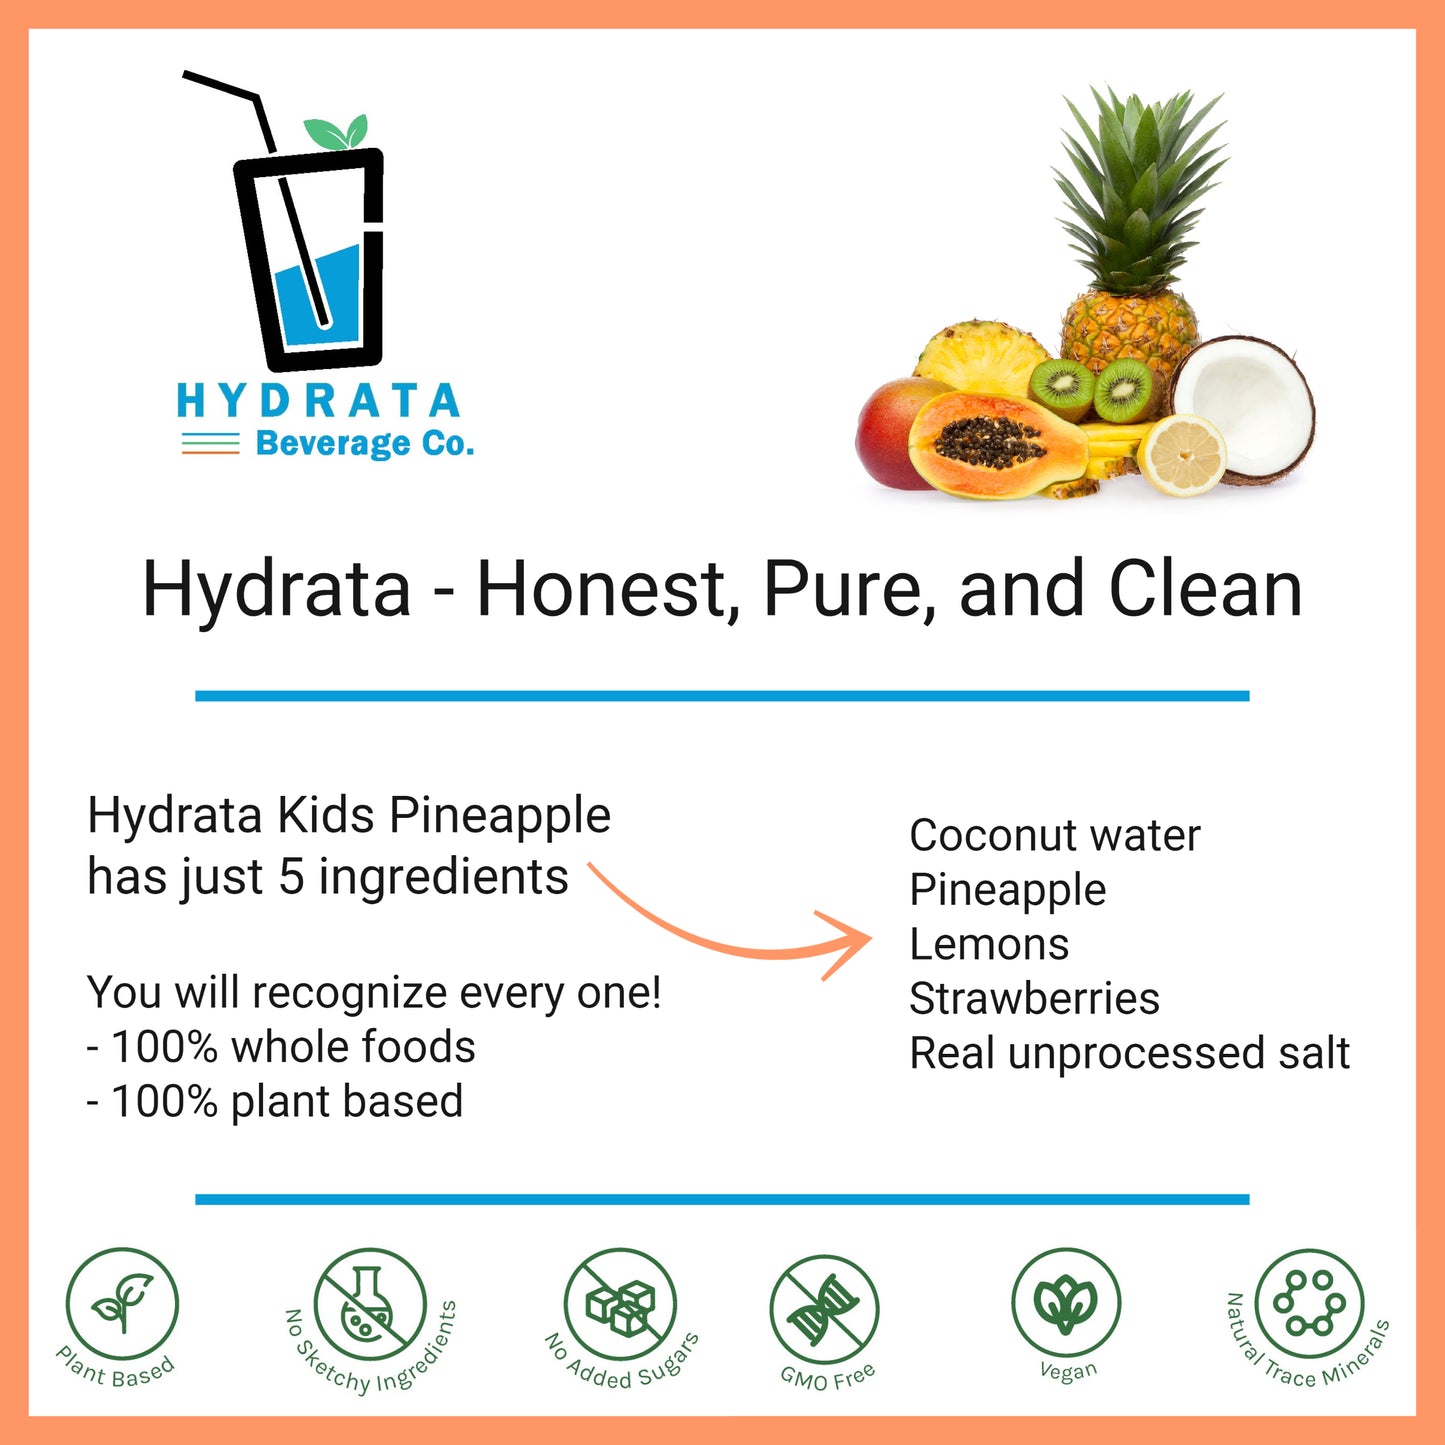 Hydrata Electrolyte Beverage Powder - Kids Pineapple Flavor